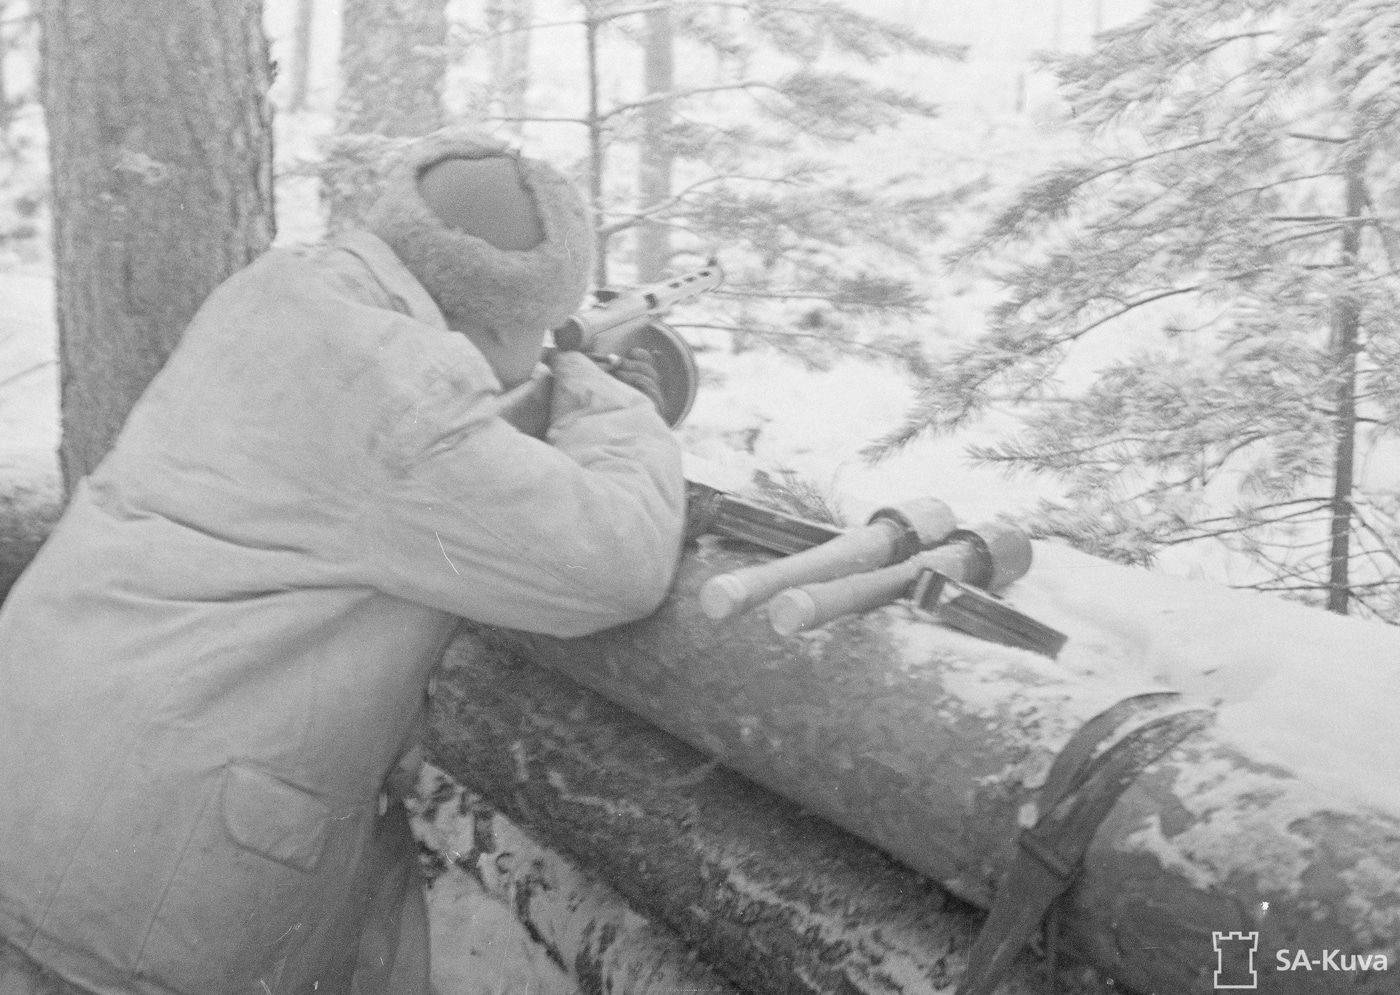 finnish soldier drum magazine suoimi kp -31 smg submachine gun stick mag grenande continuation war winter snow